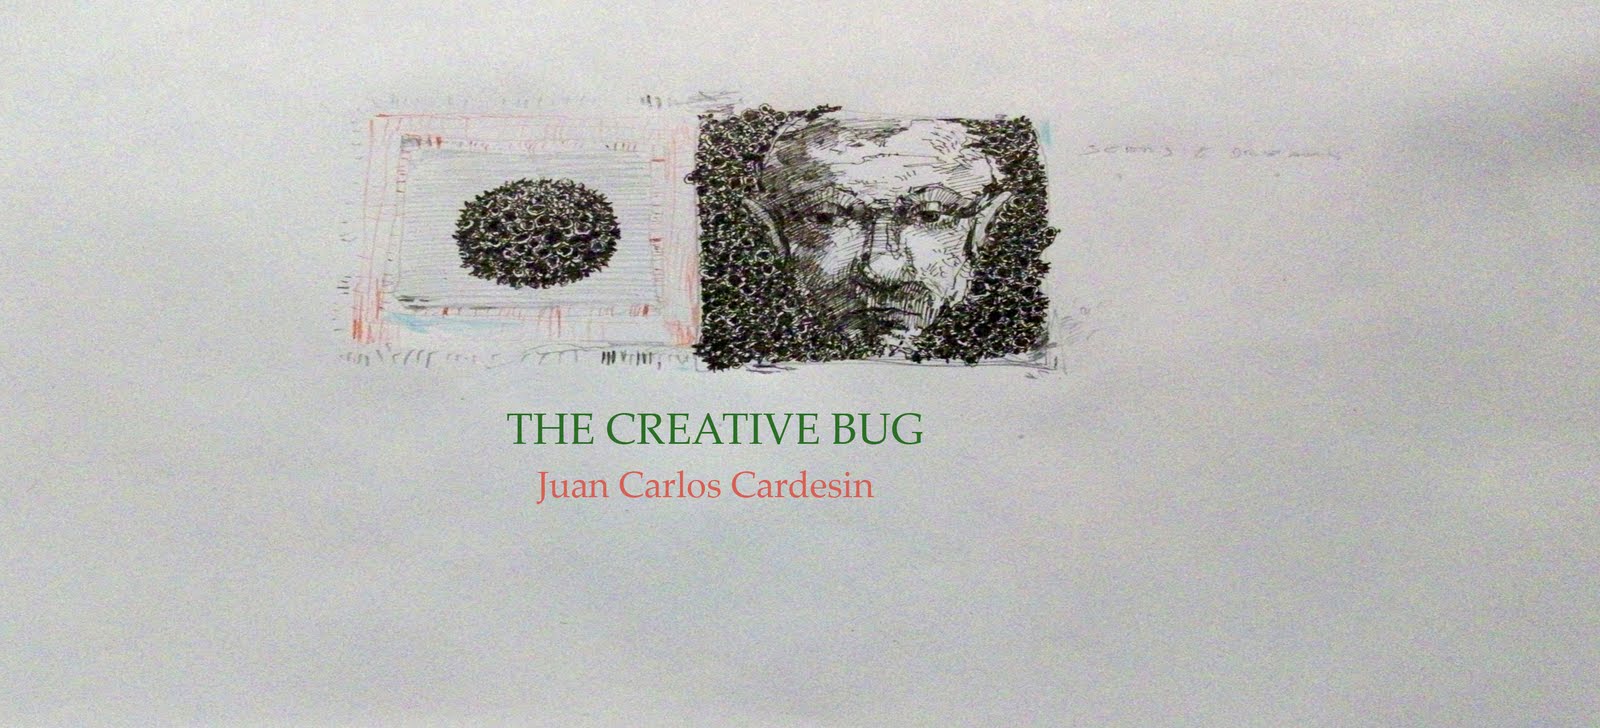 "The creative bug"